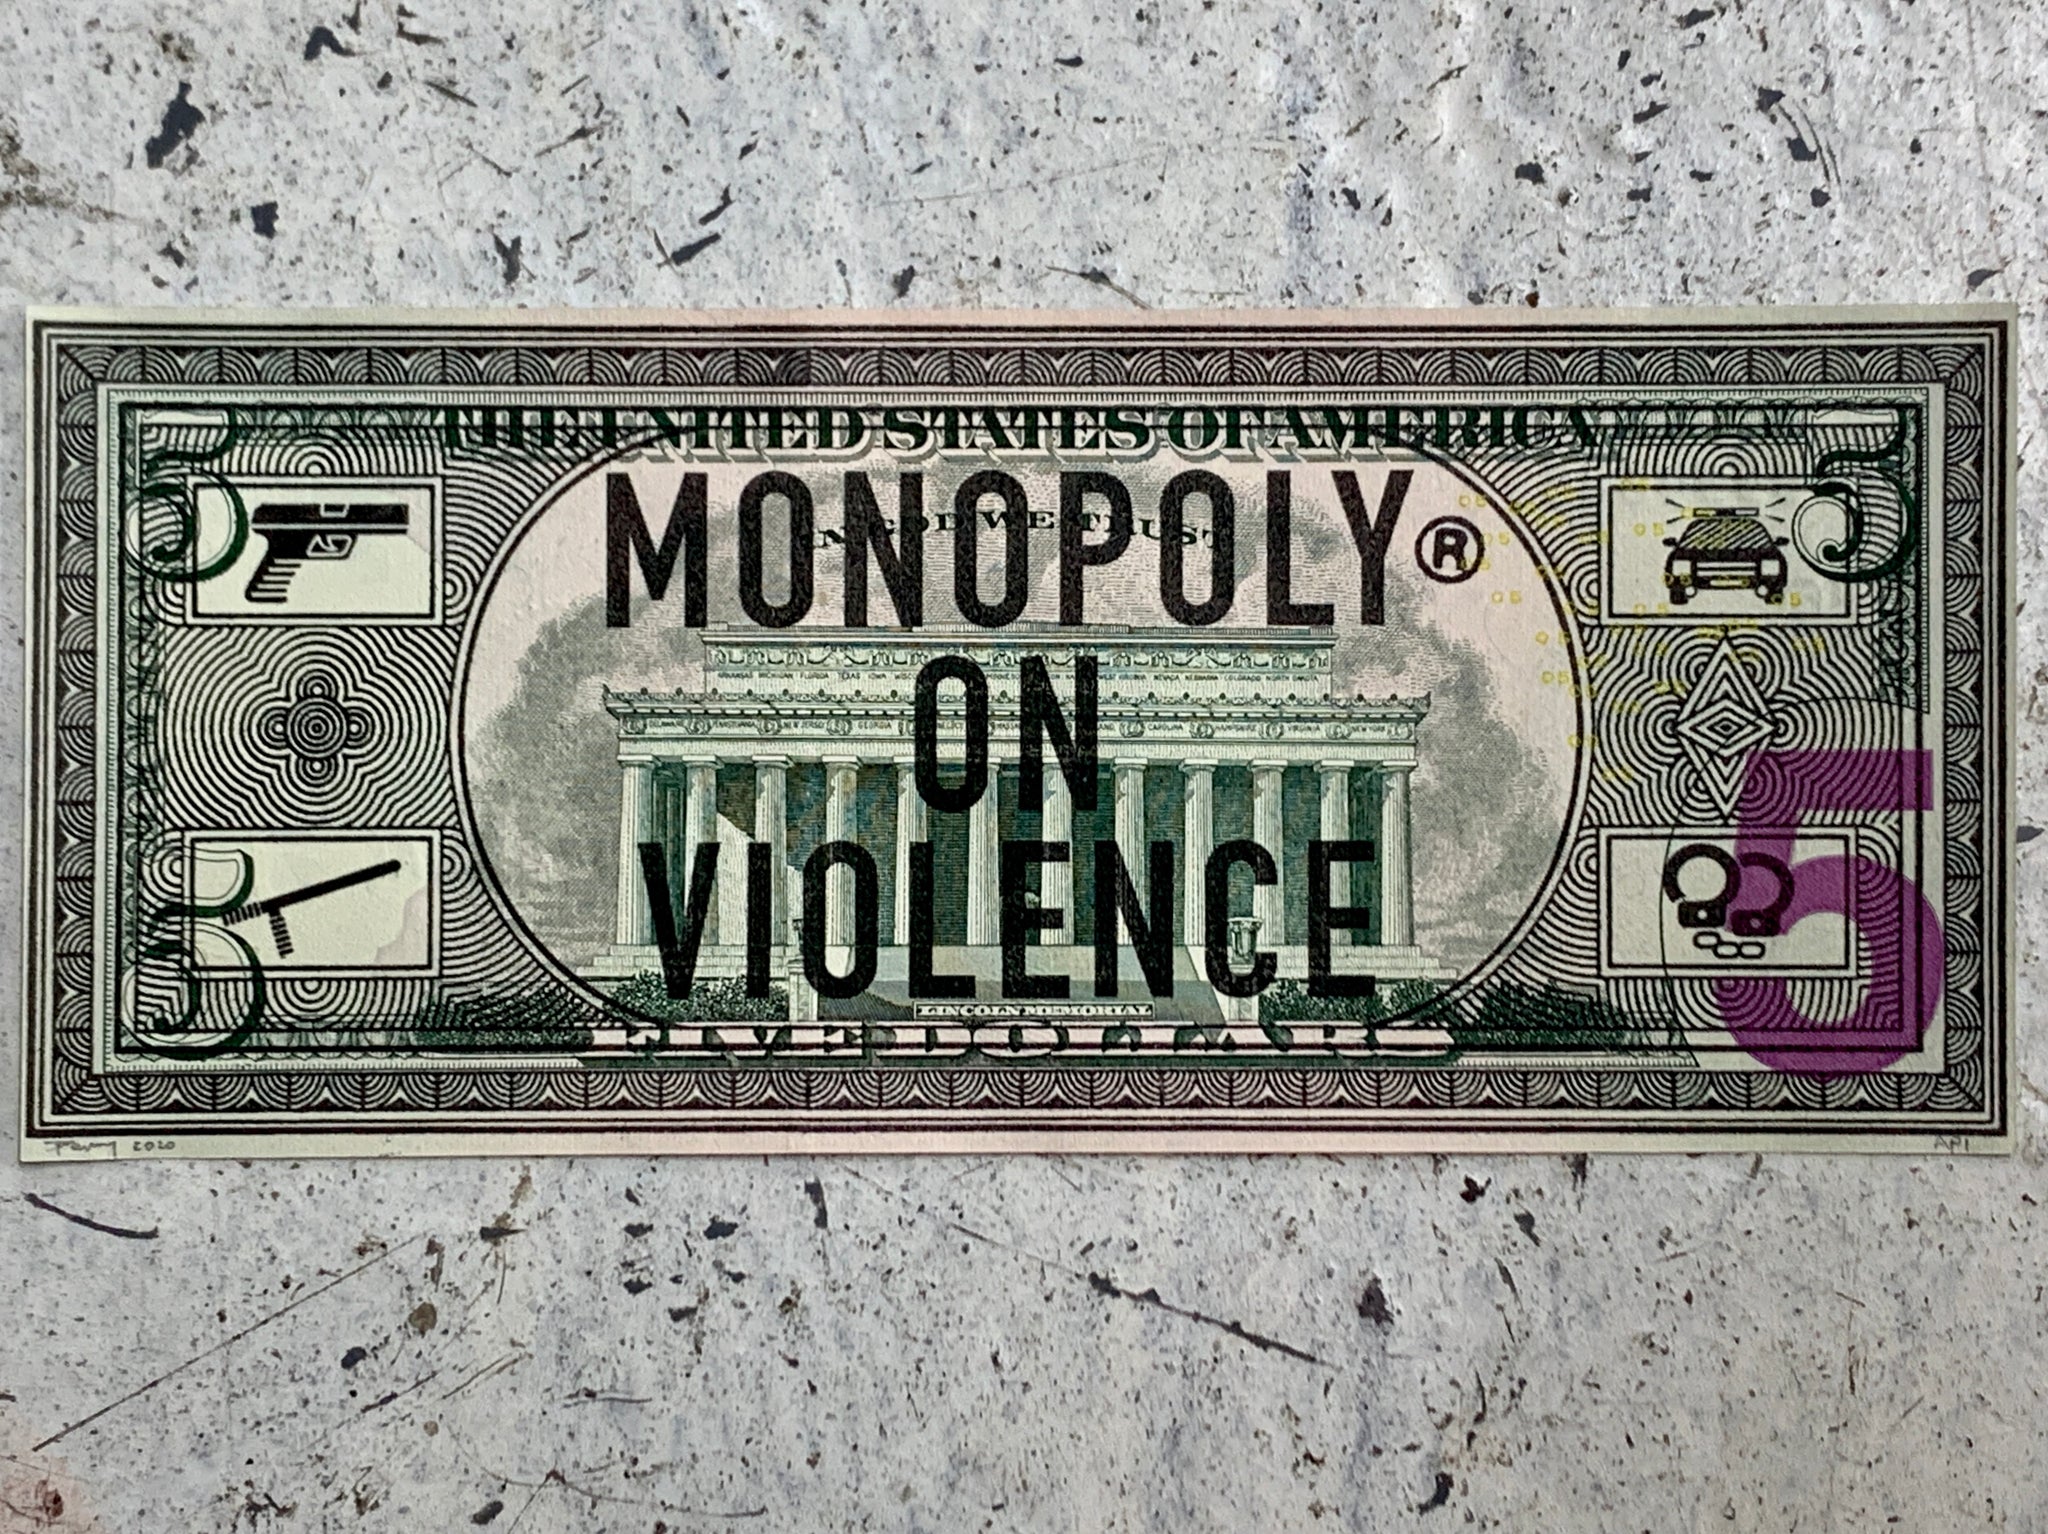 Penny - "Monopoly on Violence" (AP)